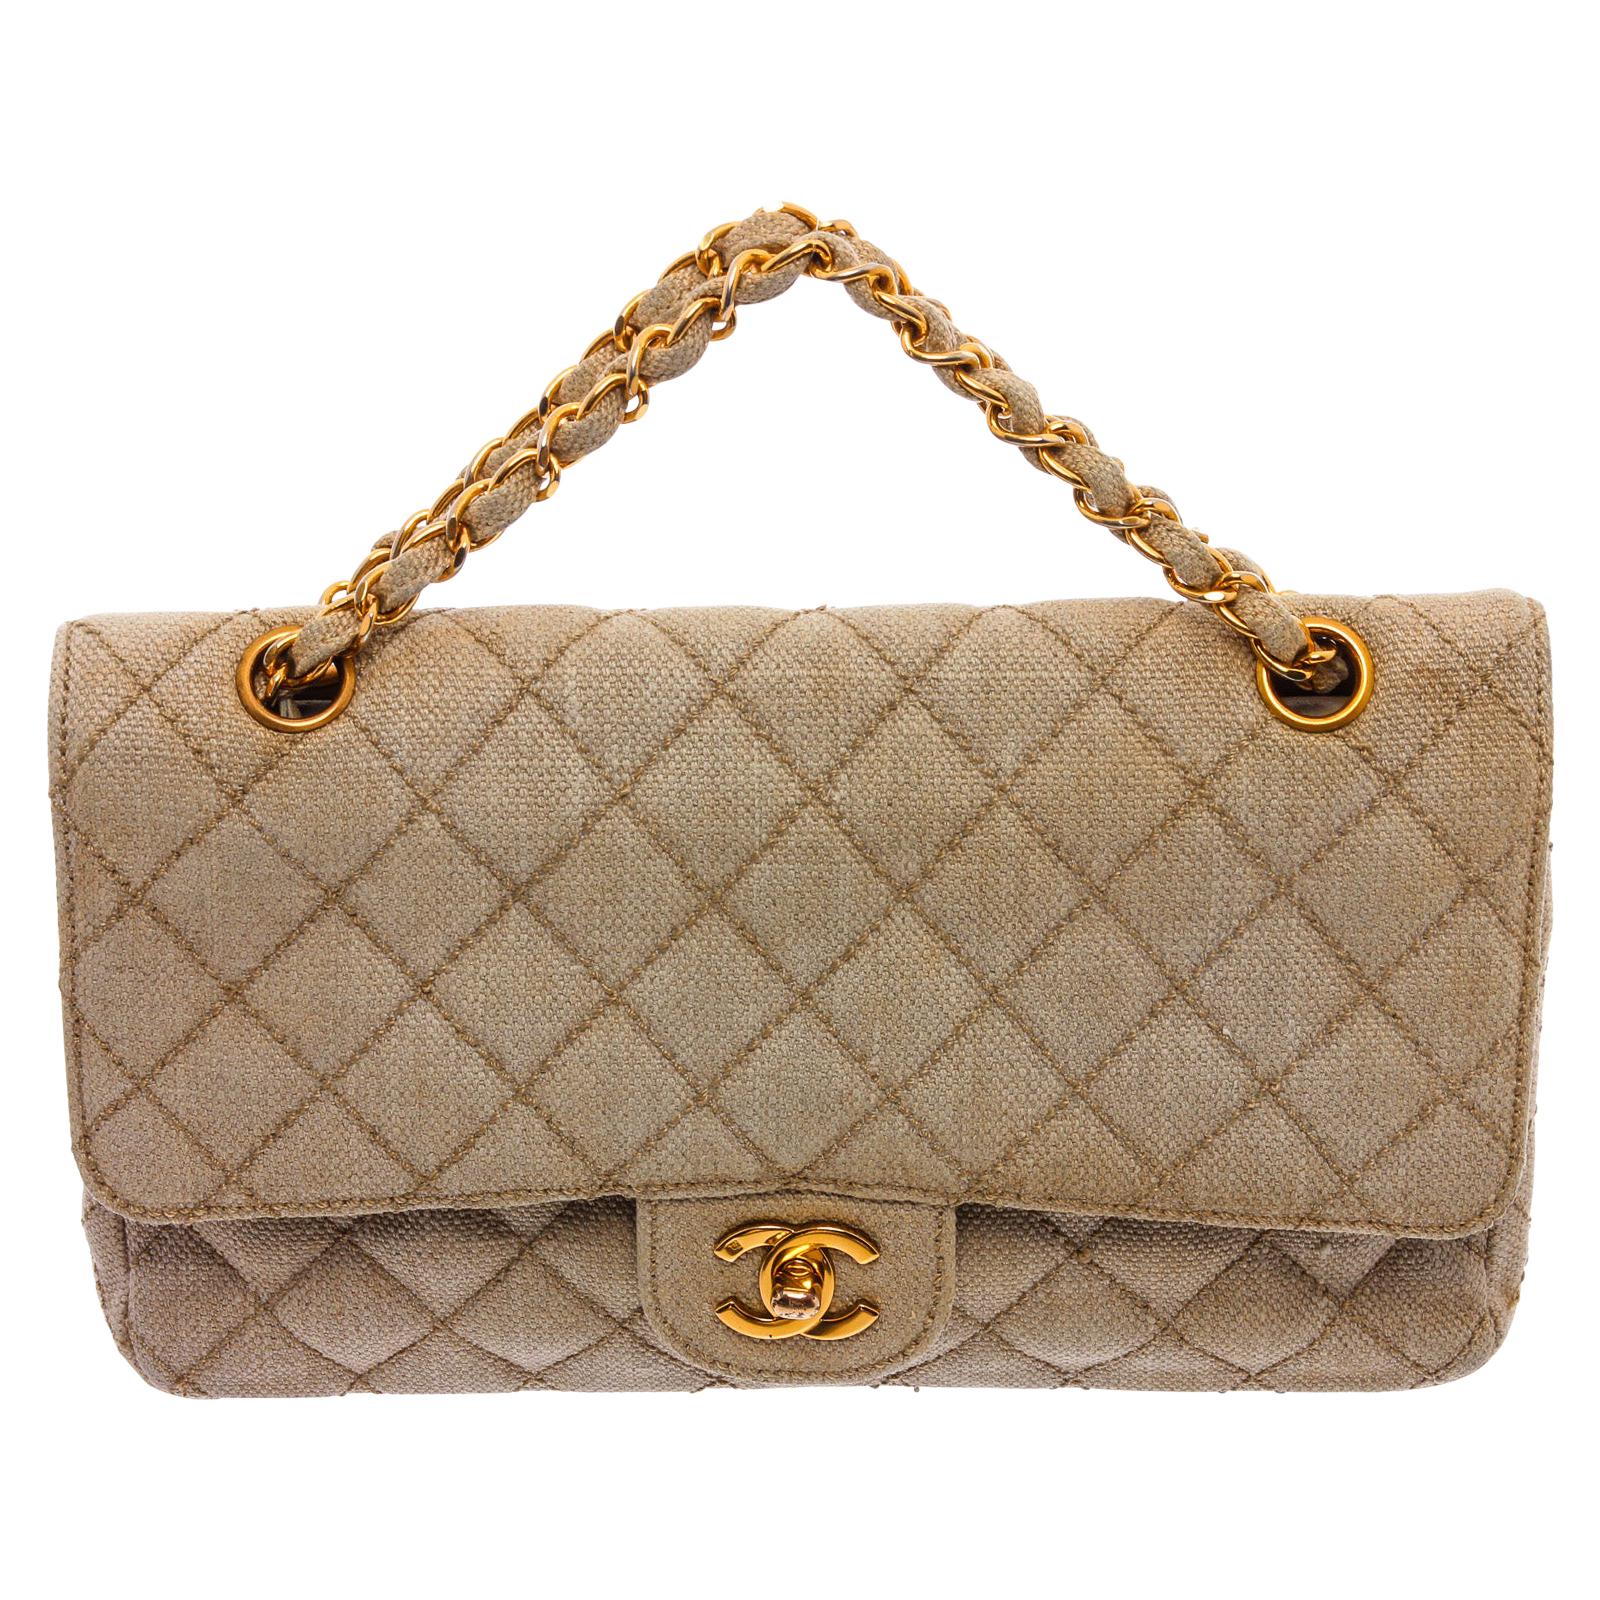 Chanel Classic Handbag - Fablle